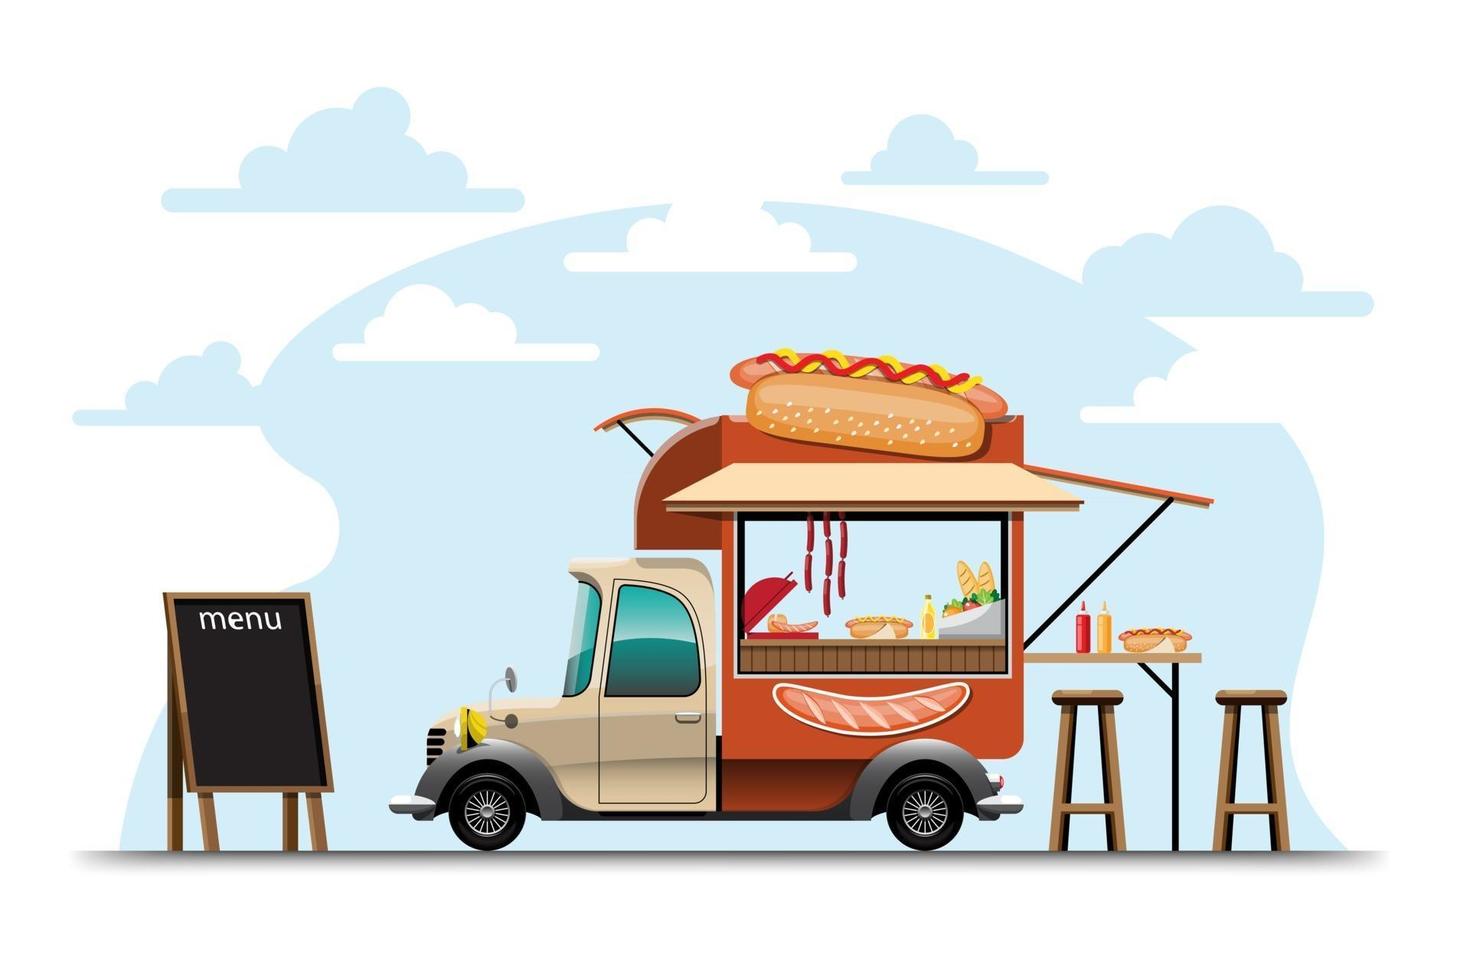 Hotdog Cart Food Stand Truck Burger Street Edible Cooking Van Design Element Art SVG EPS Logo Png DXF Vector Clipart Cutting Cut Cricut